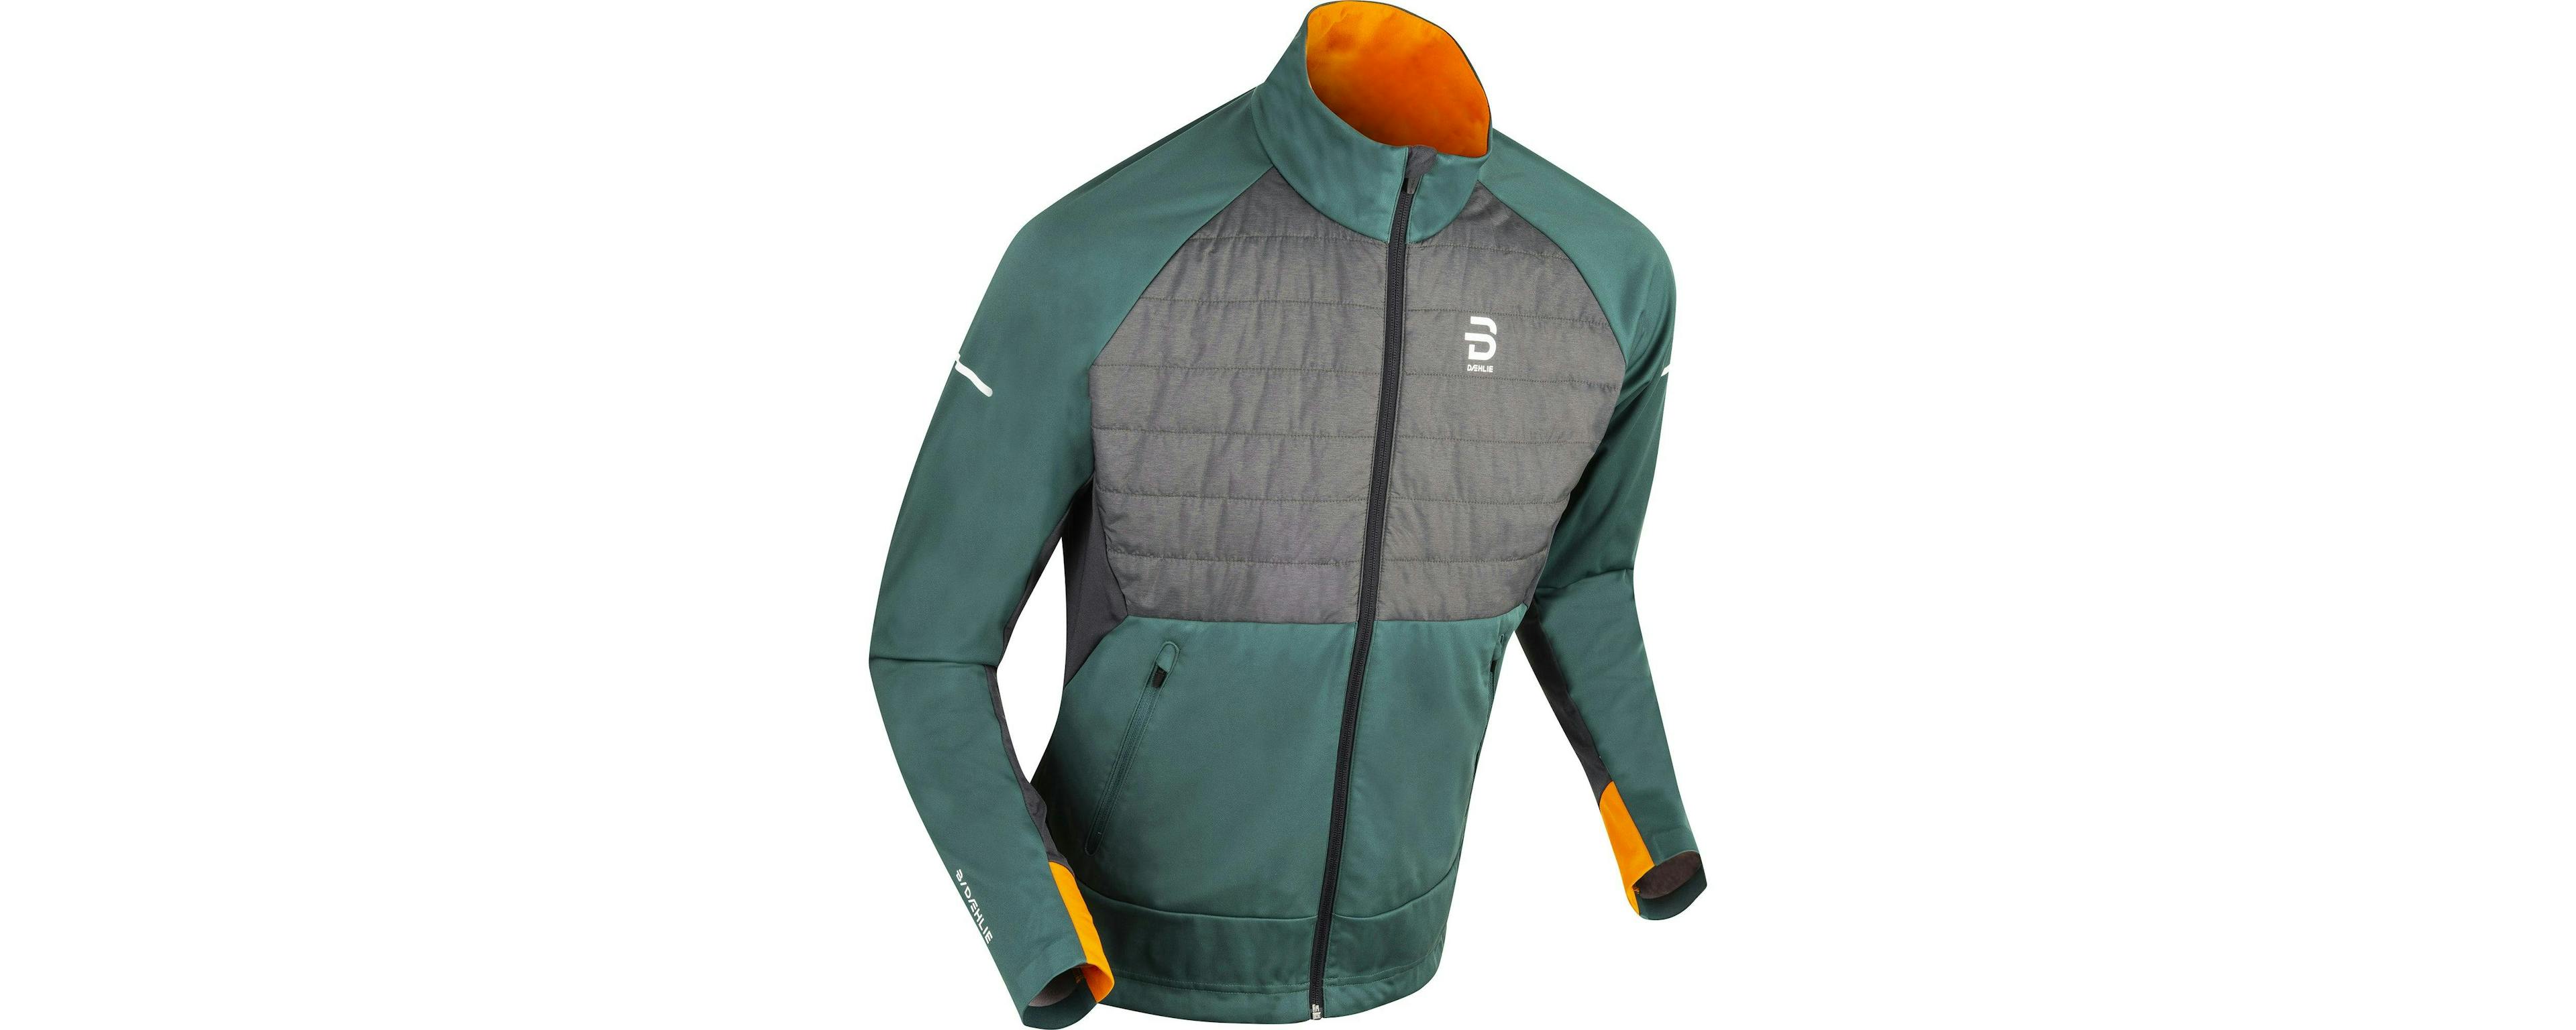 Green, grey and orange ski jacket